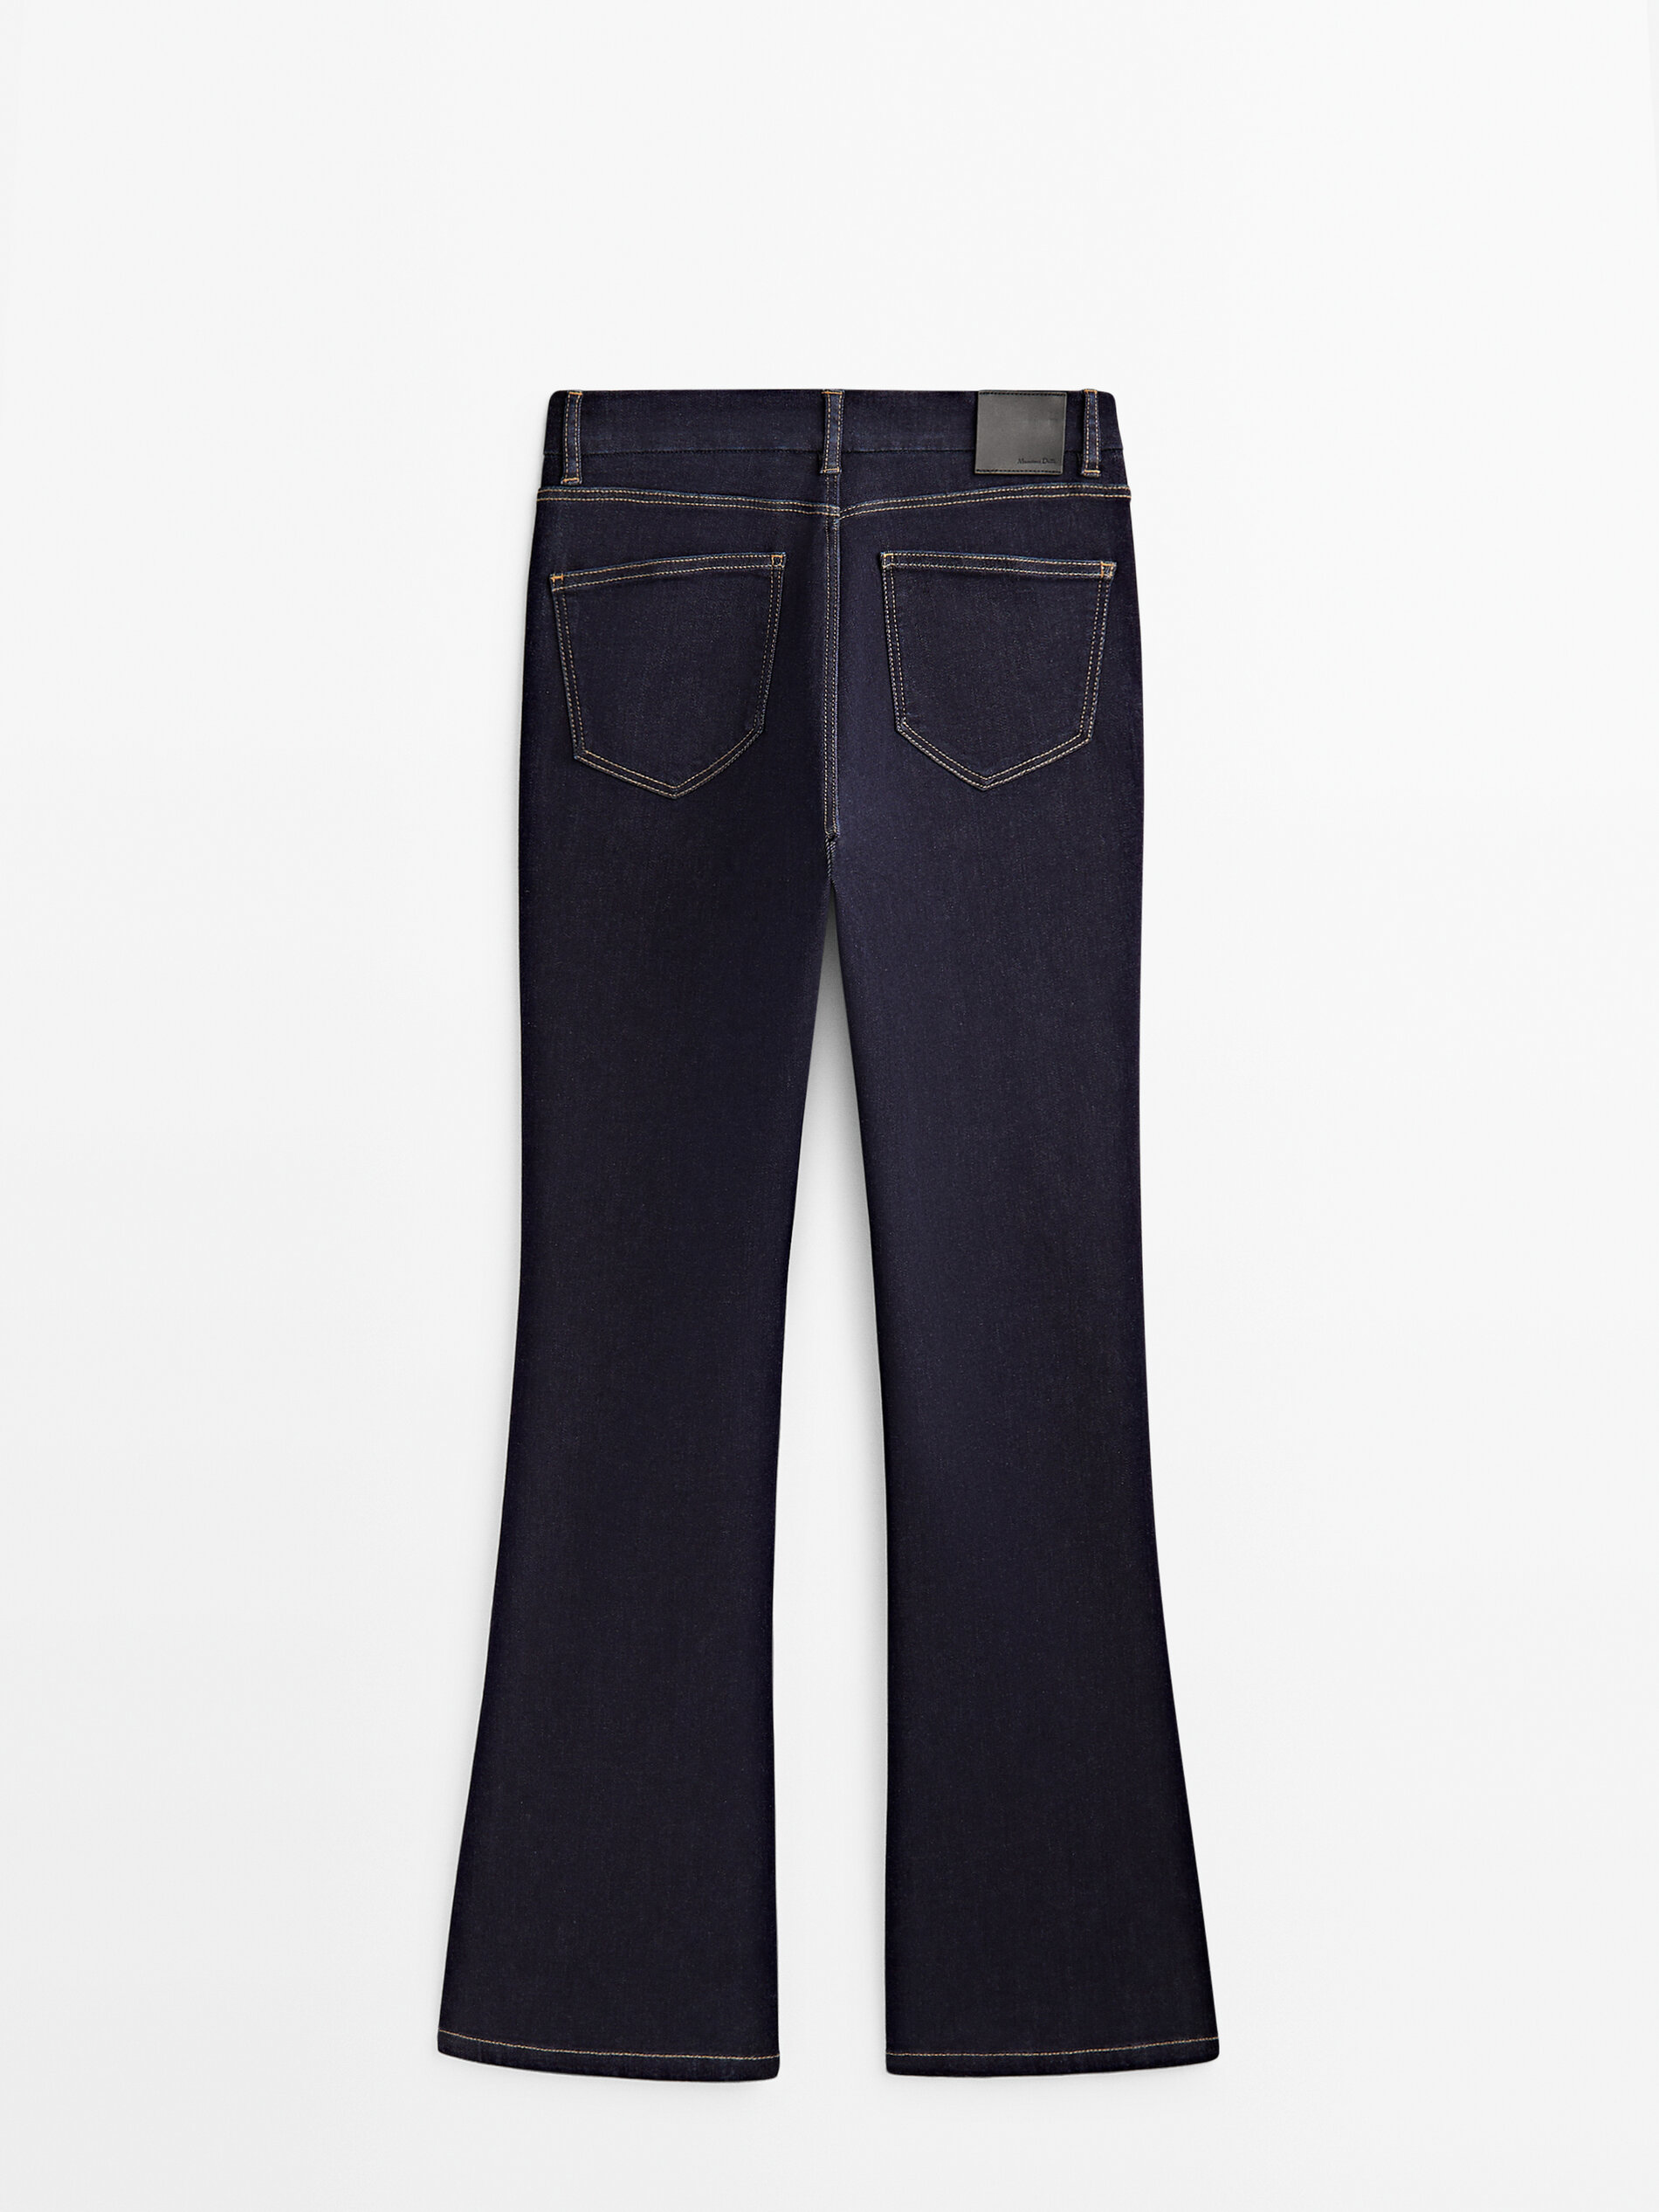 Jeans tiro alto skinny flare fit